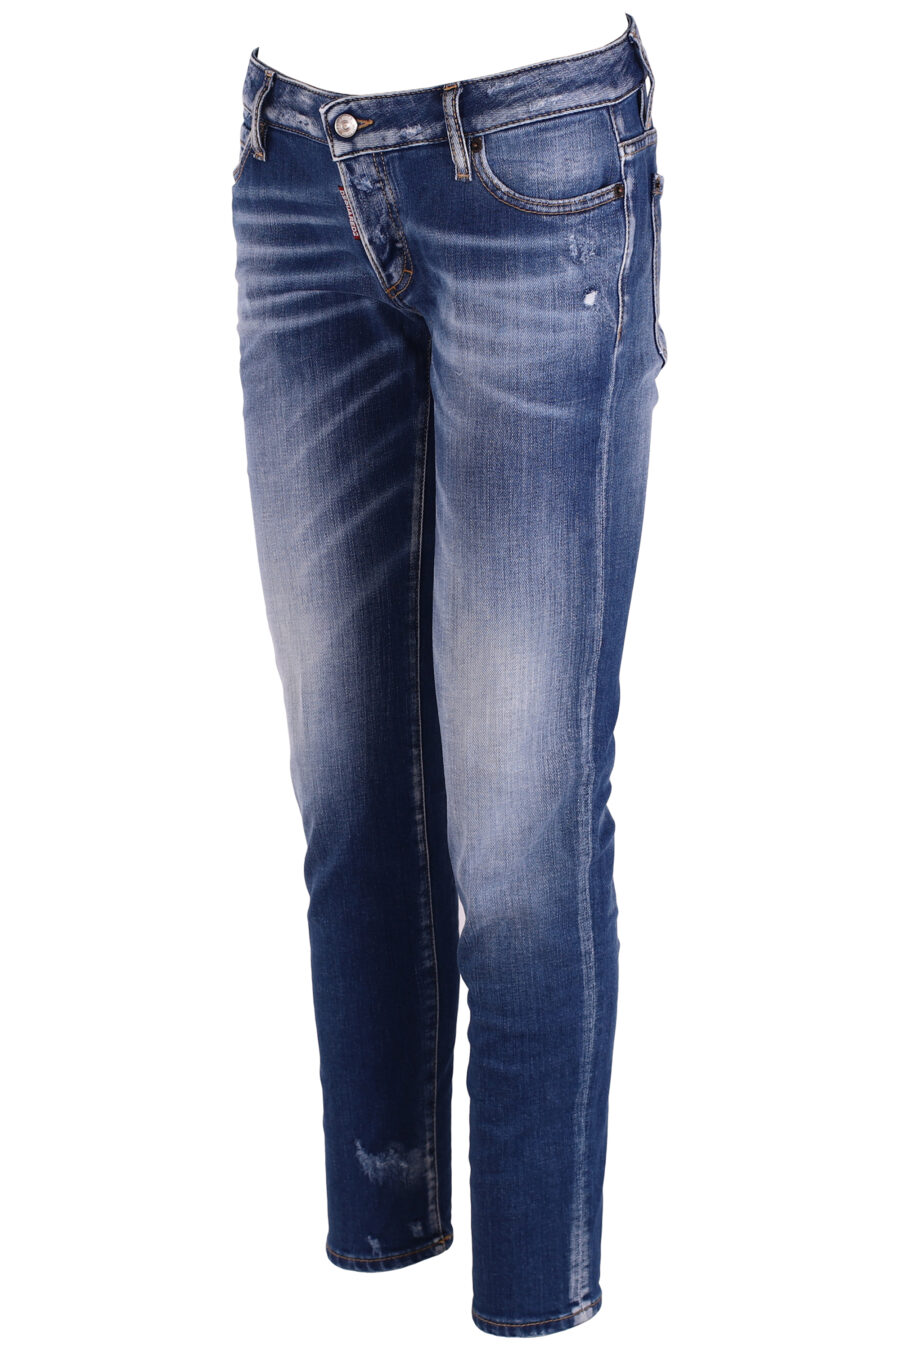 Jeans "jennifer jean" blue worn - IMG 3766